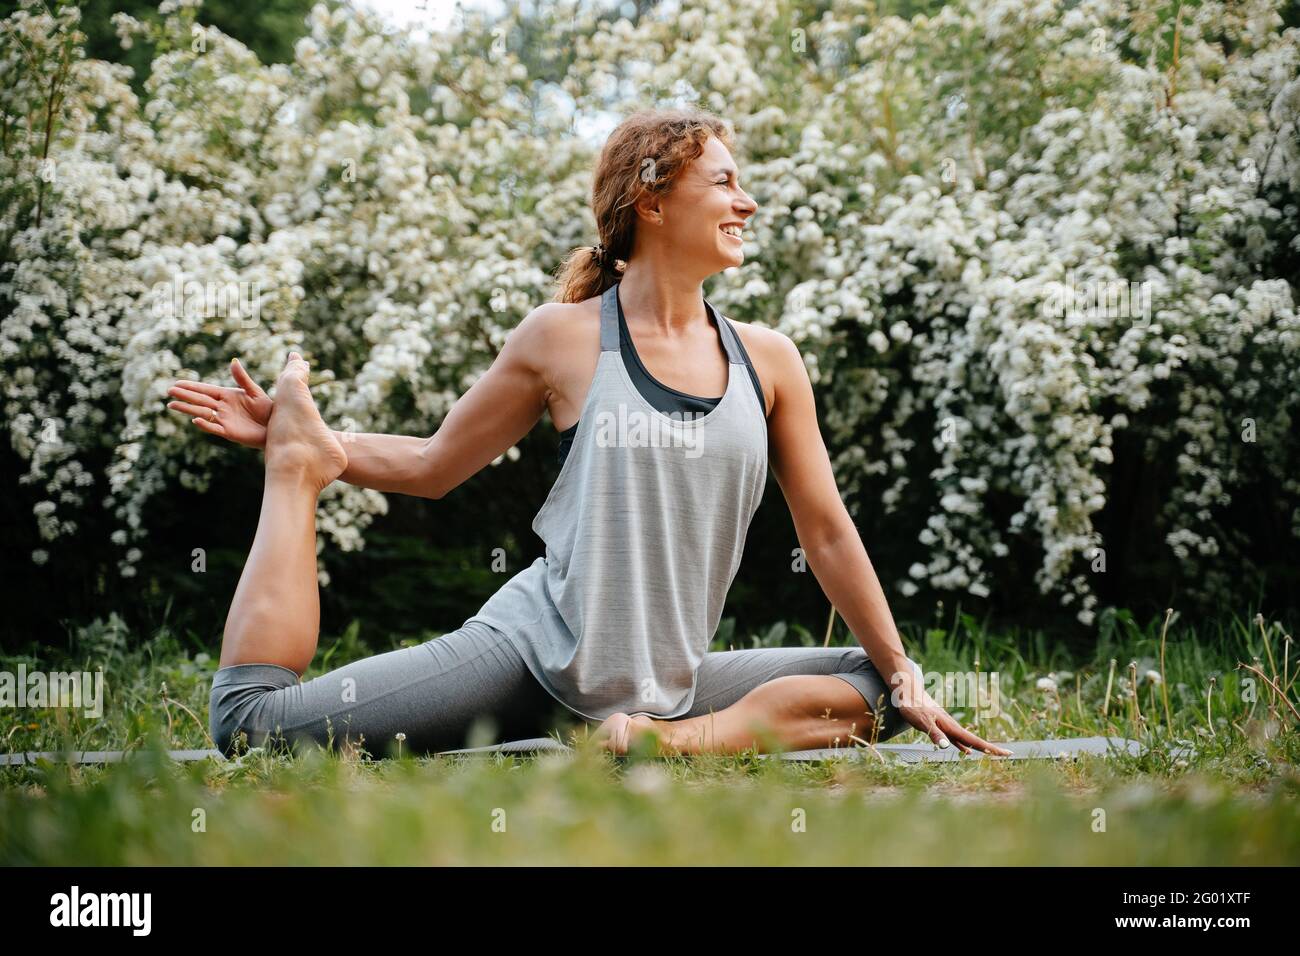 Smiling woman doing yoga on green grass. Stock Photo